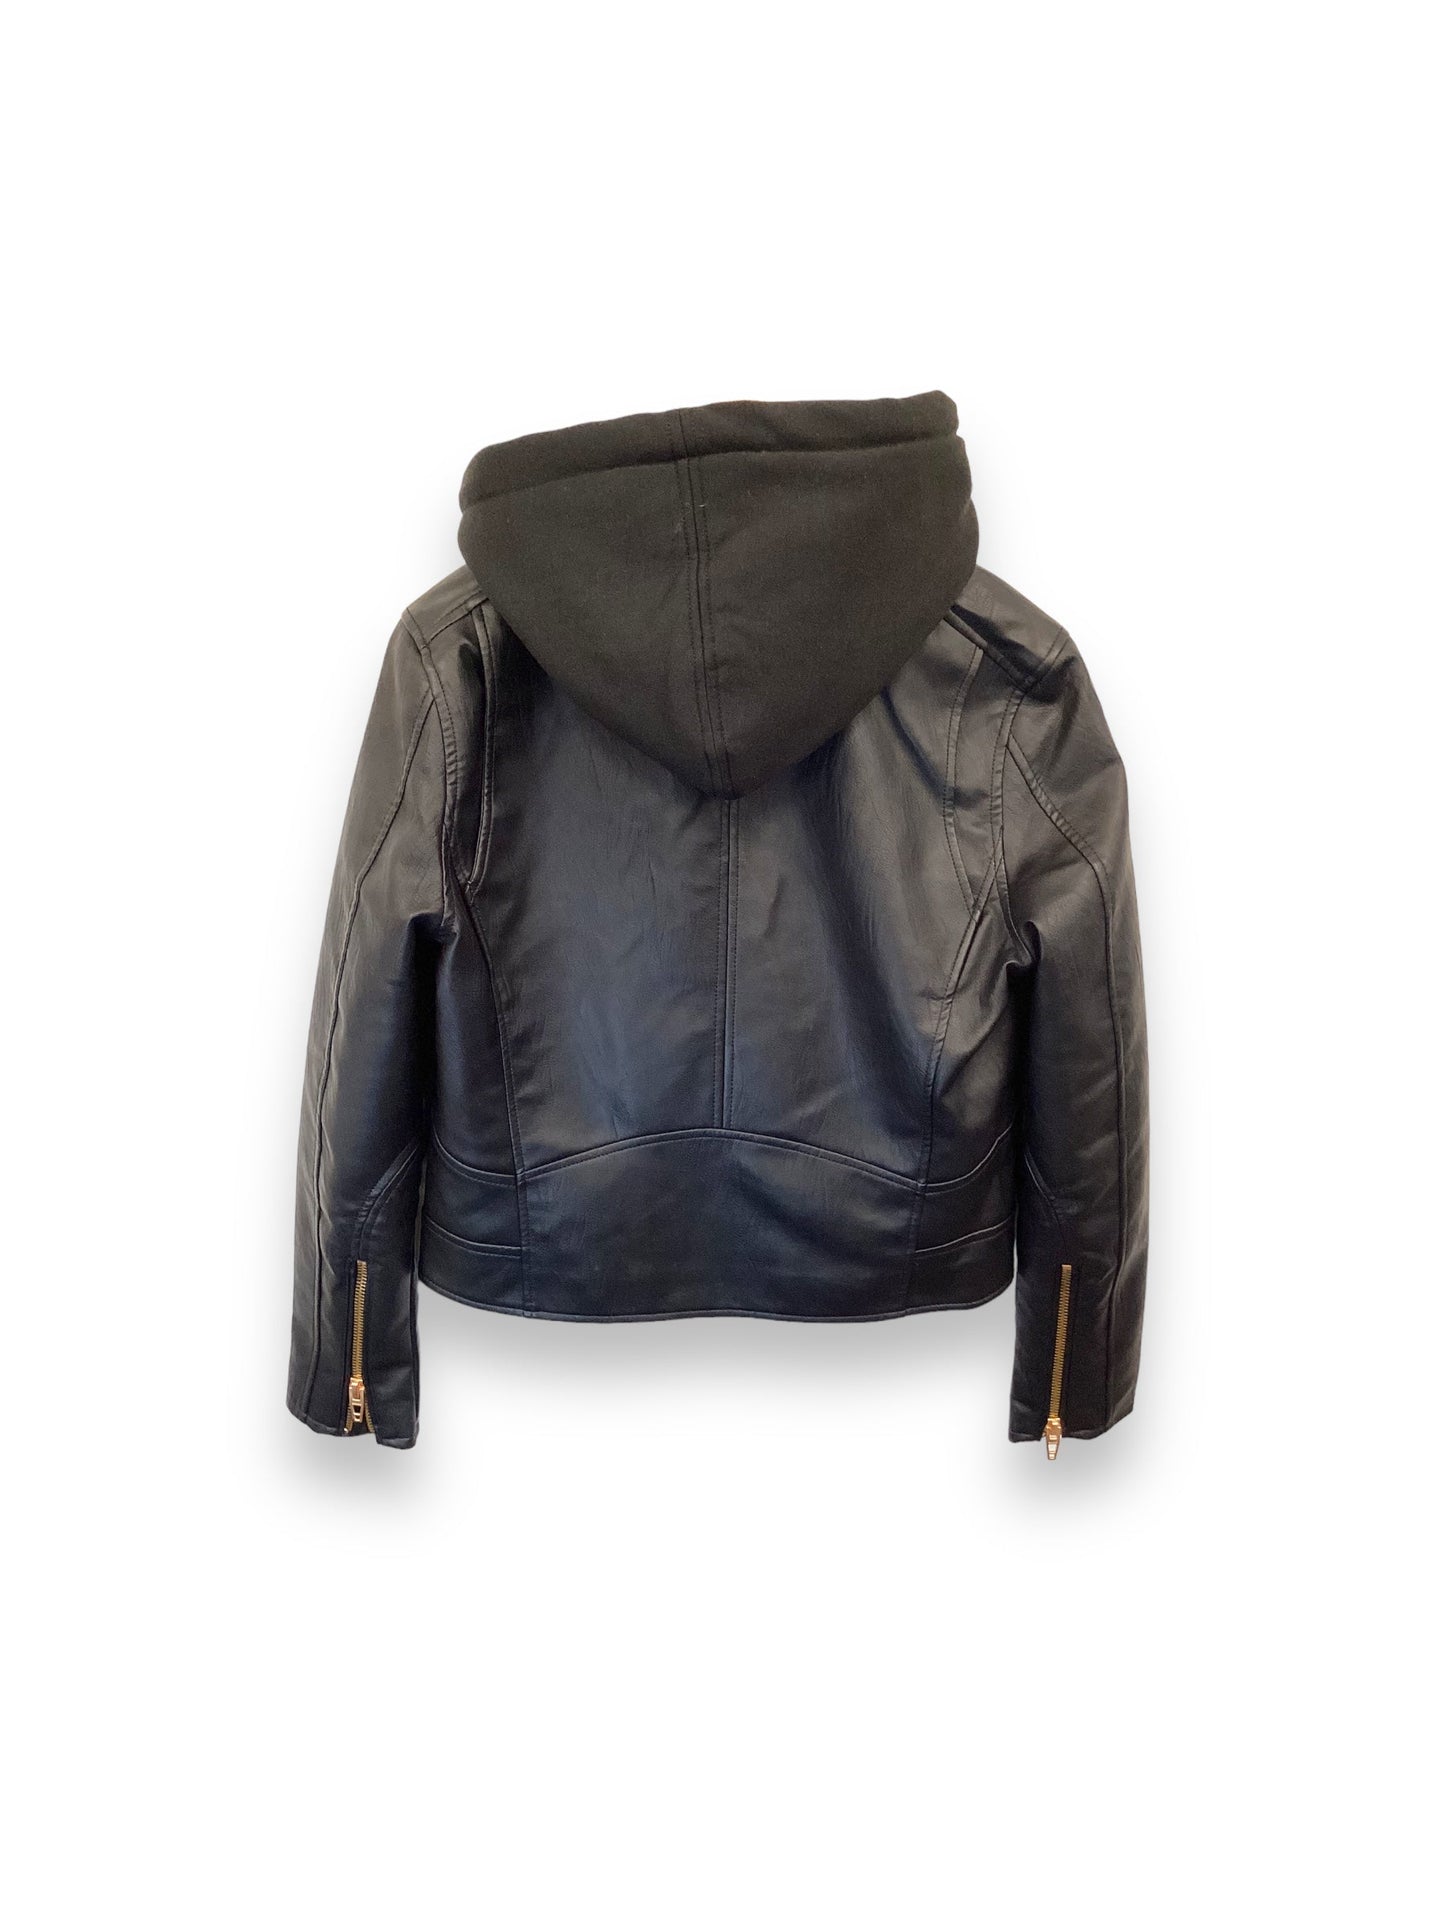 Jacket Moto By Blanknyc  Size: M